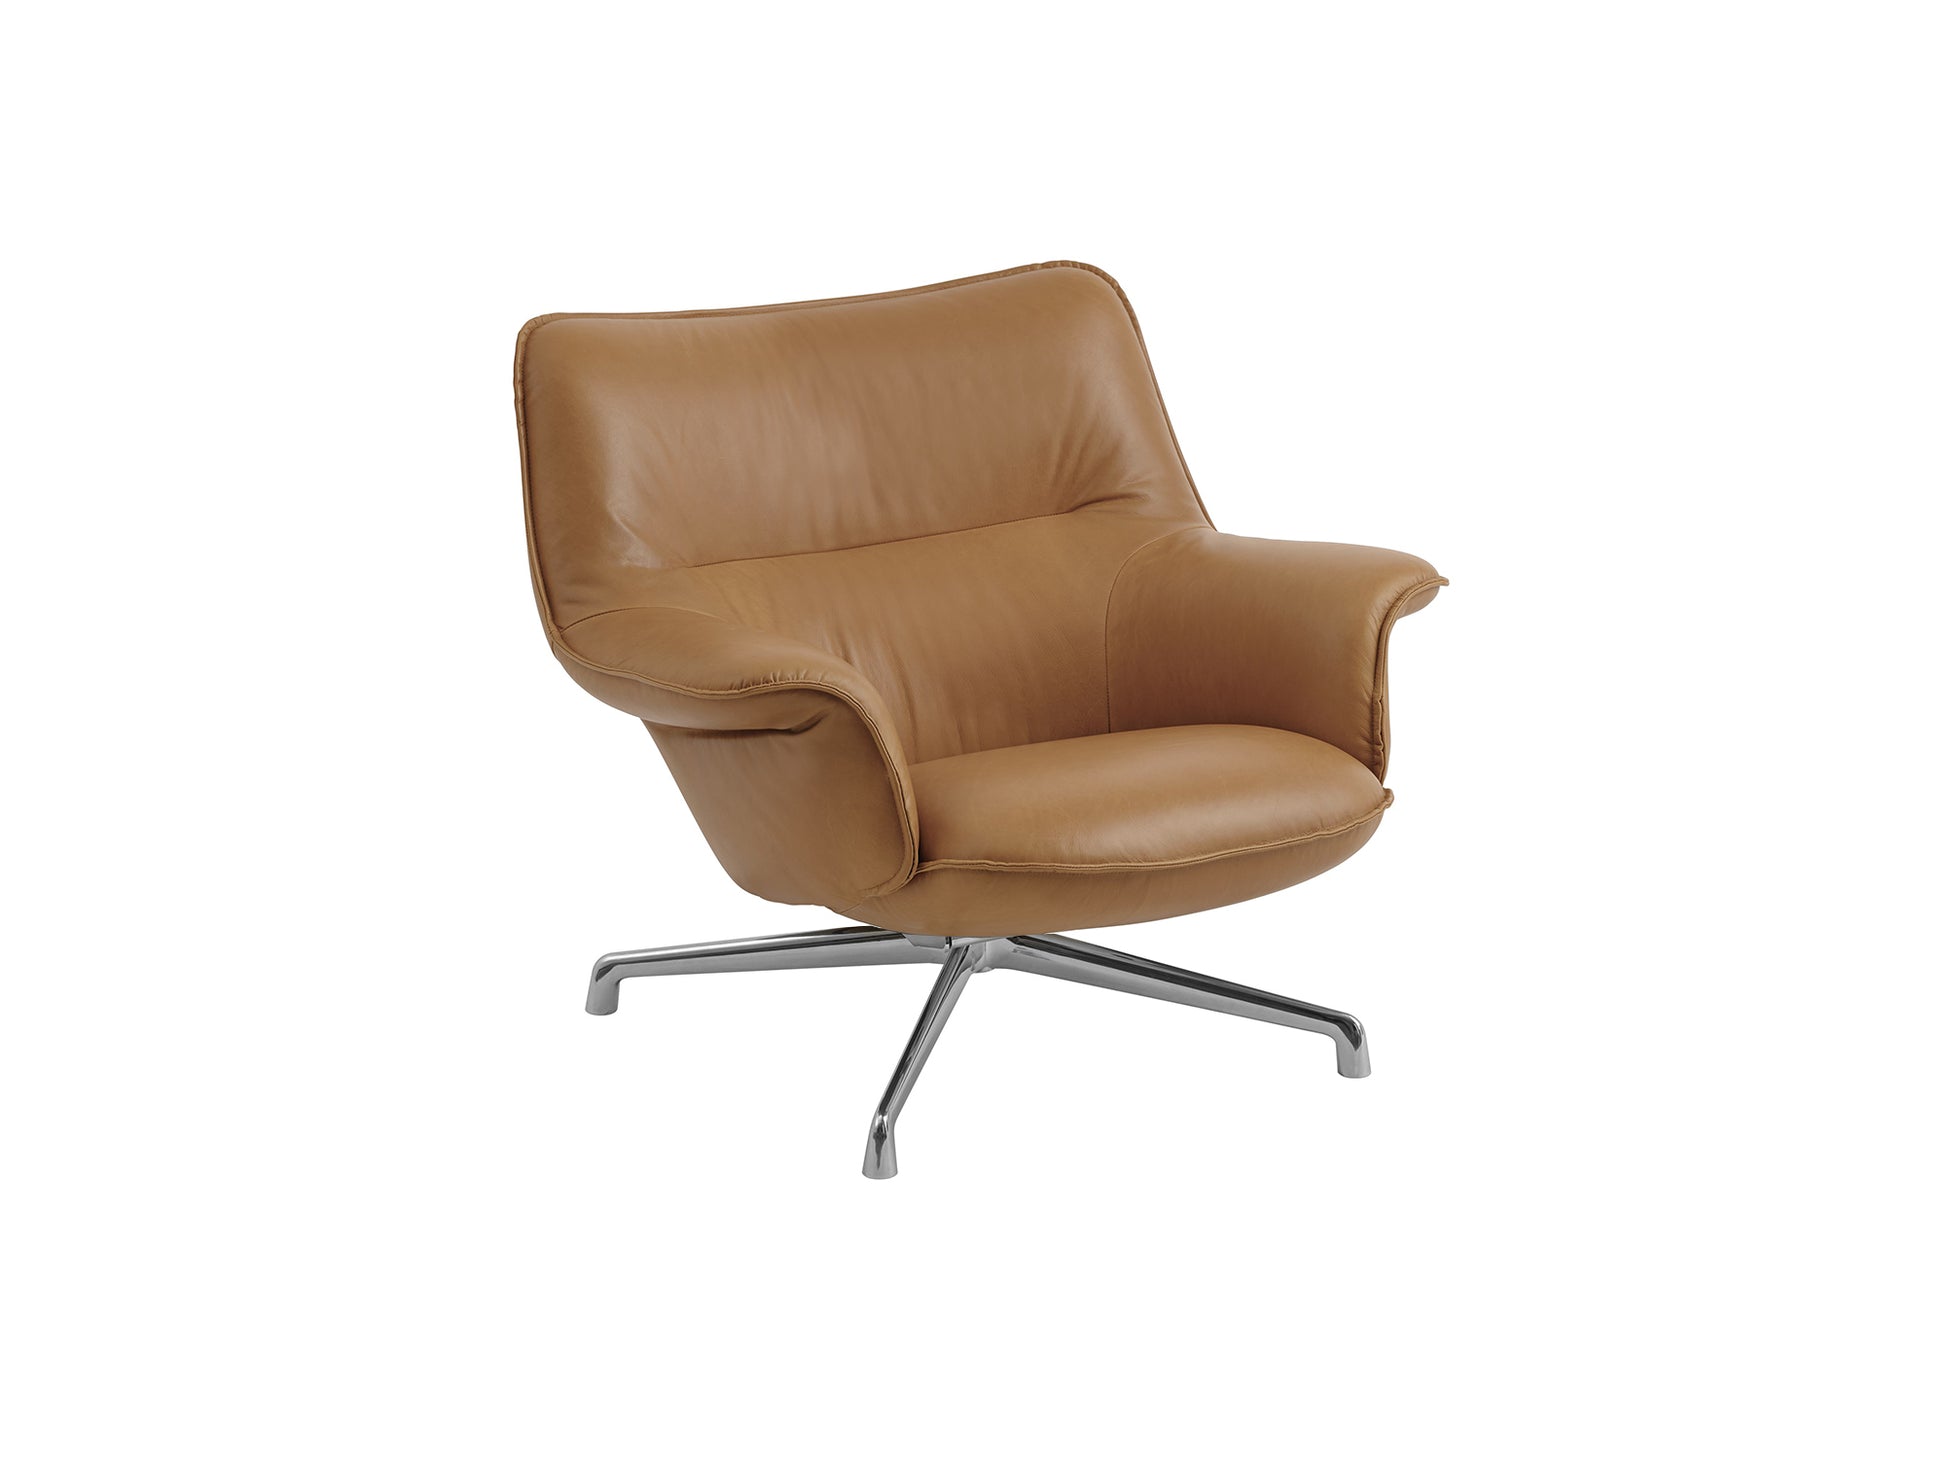 Doze Lounge Chair Low Back - Swivel Base by Muuto / Cognac Silk Leather / Polished Aluminum Base